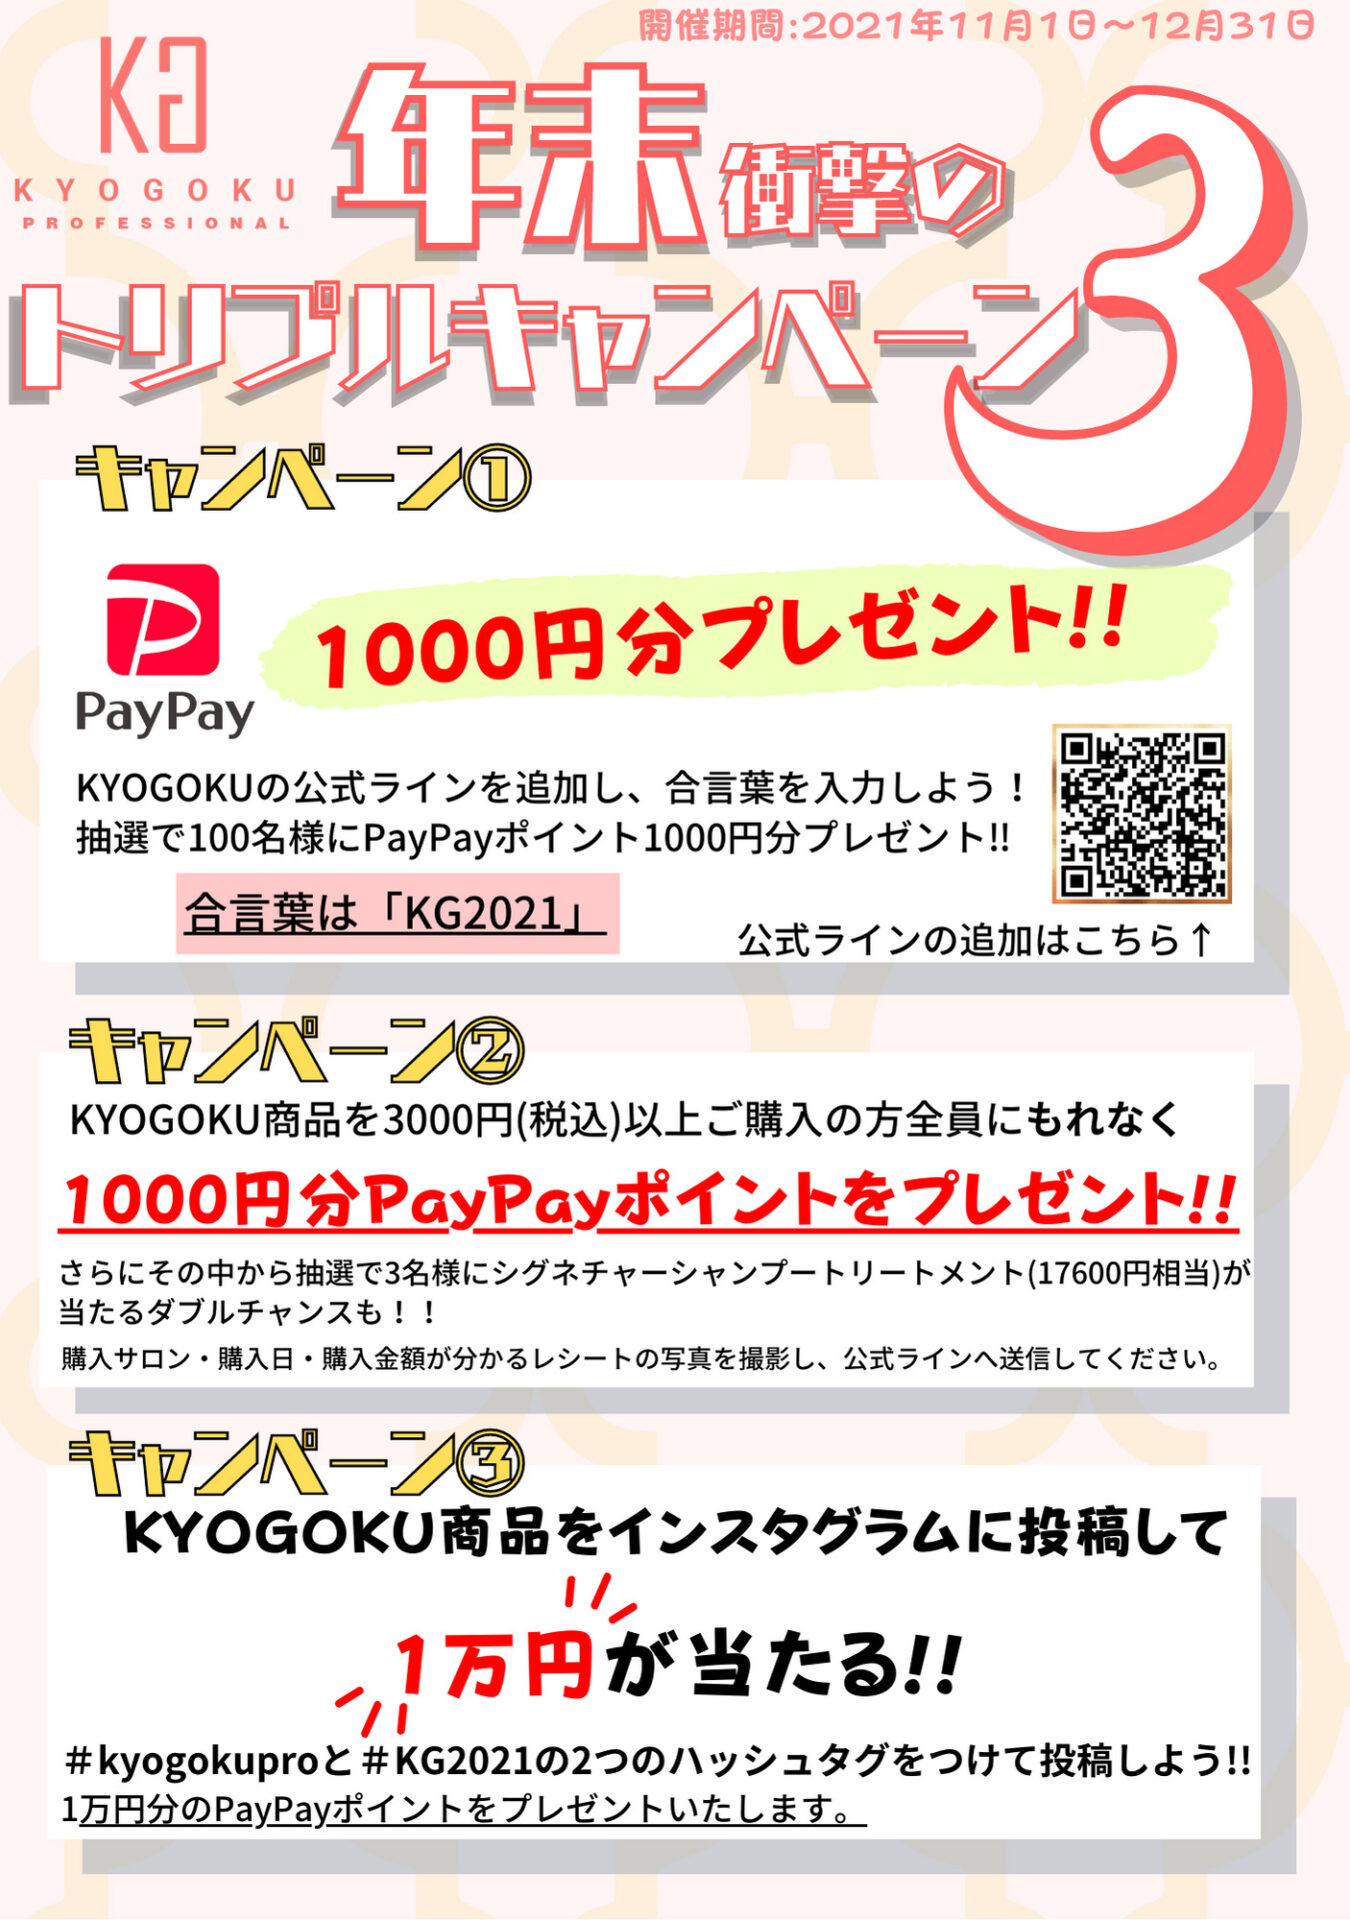 Kyogoku Professional 年末キャンペーン開催が決定